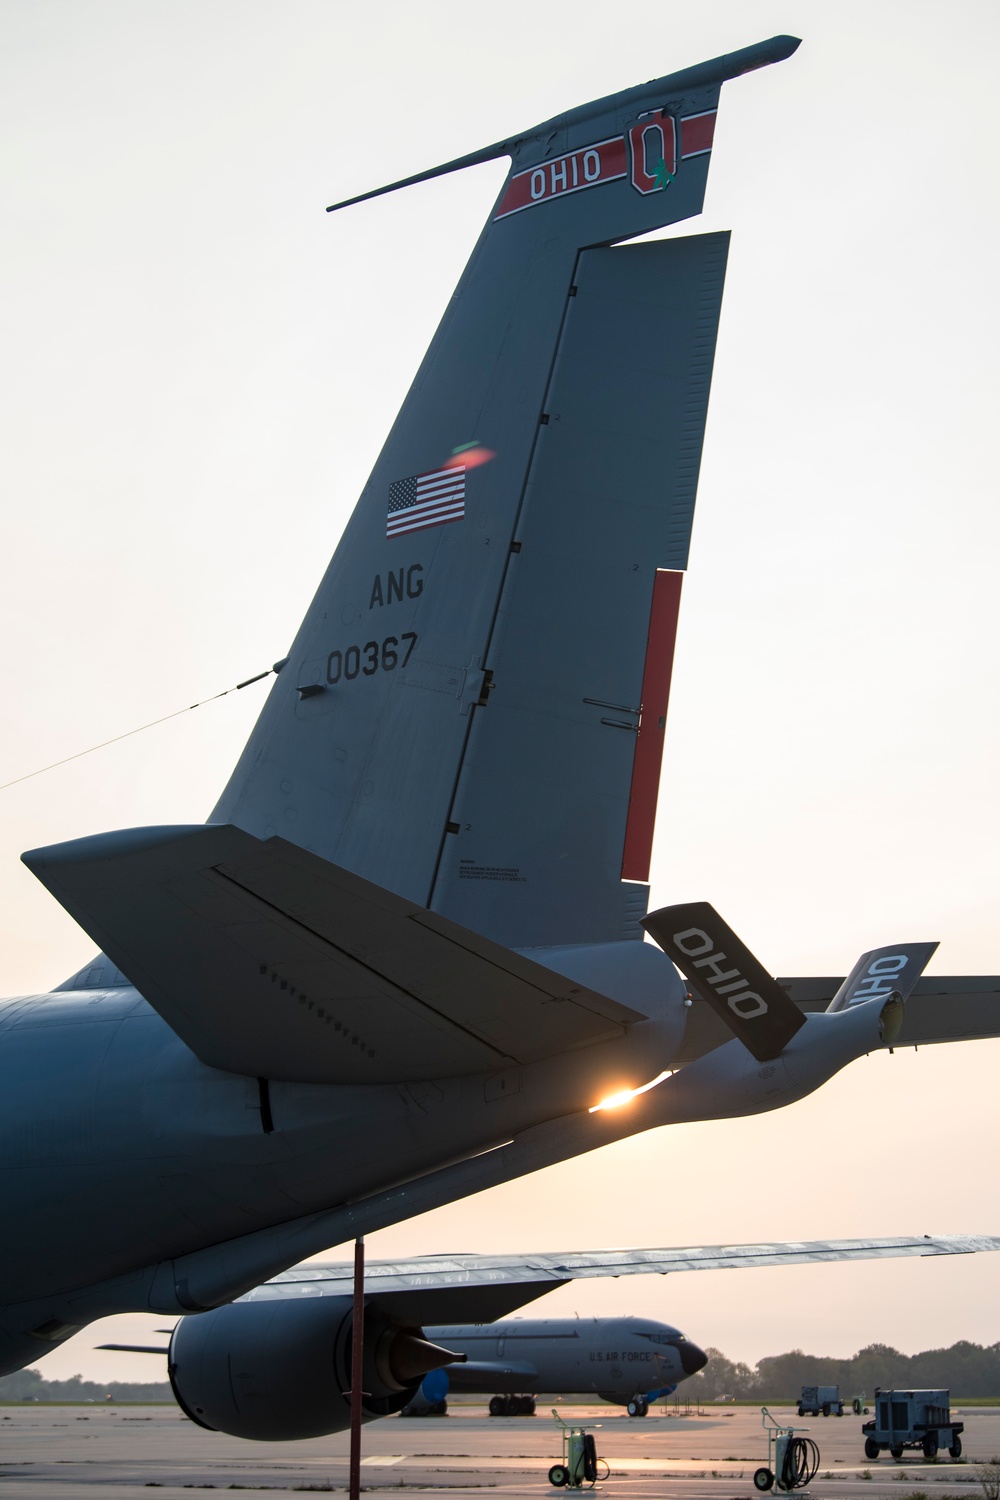 KC-135 at sunrise